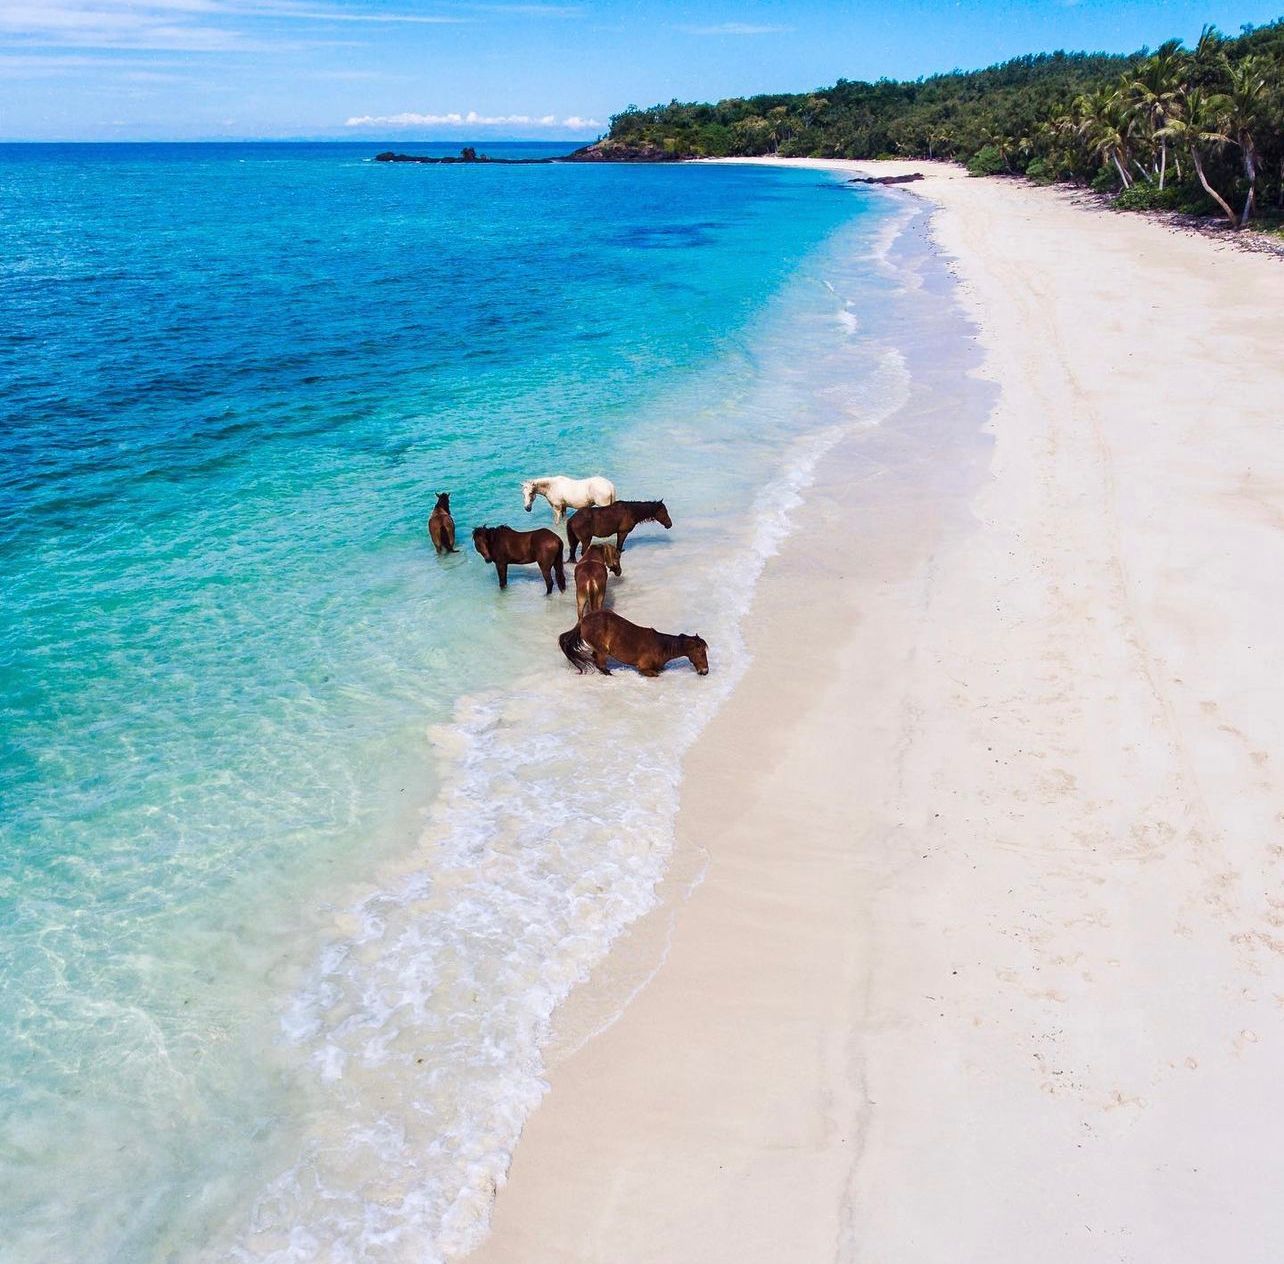 Fijian Horses around the Island